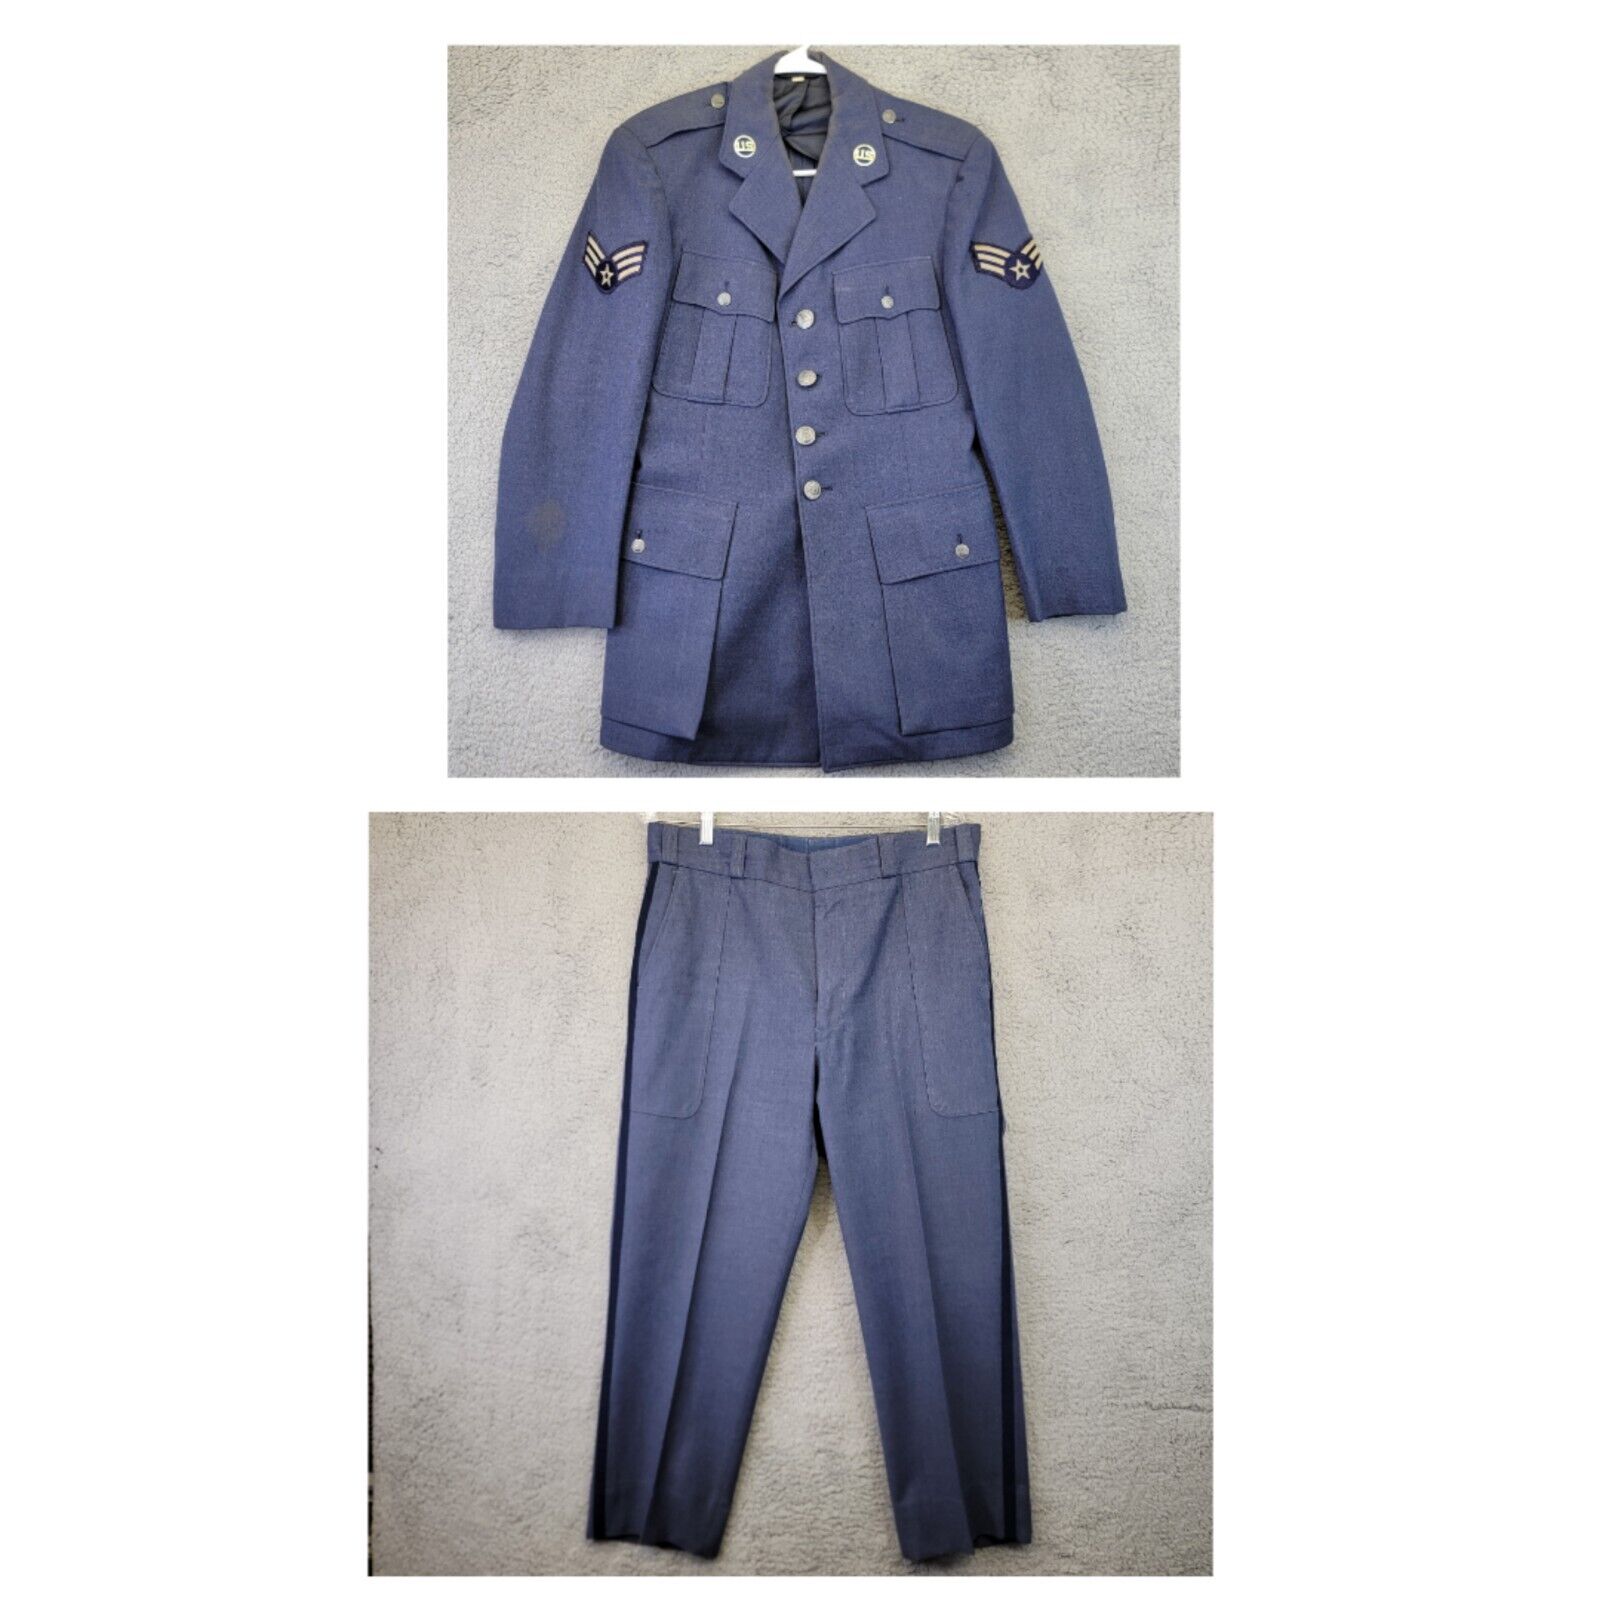 Vtg Military US Air Force Jacket Pants Uniform Outfit Tropical Size 36R Patches